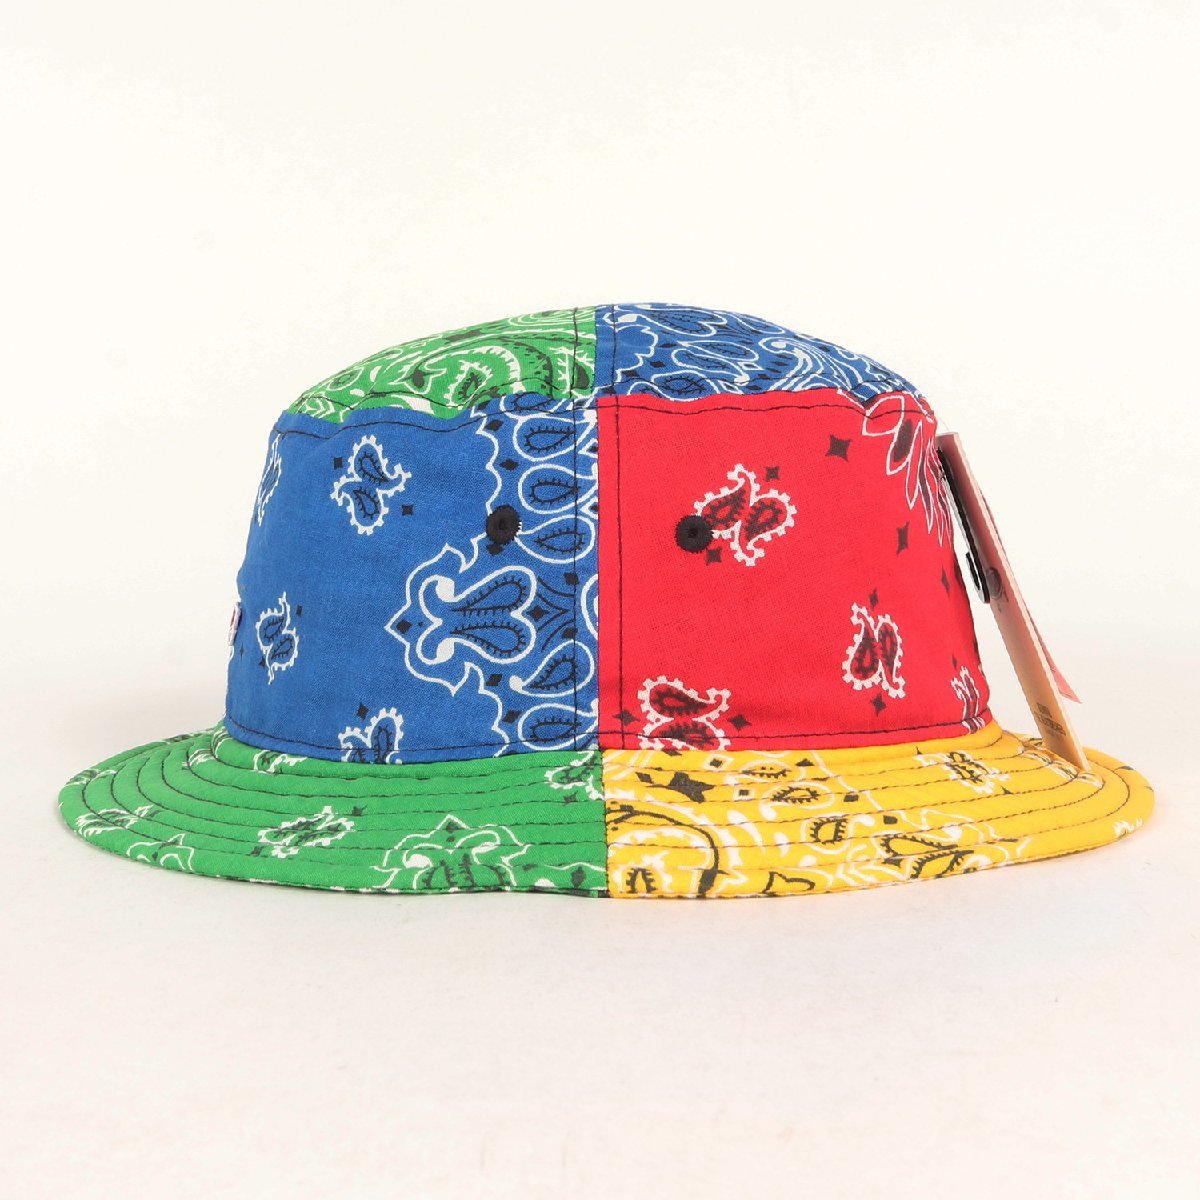  new goods BEDWINbedo wing hat size :L/XL 21SS VANS VAULT Vans bolt k Lazy peiz Lee pattern bucket hat multi collaboration 